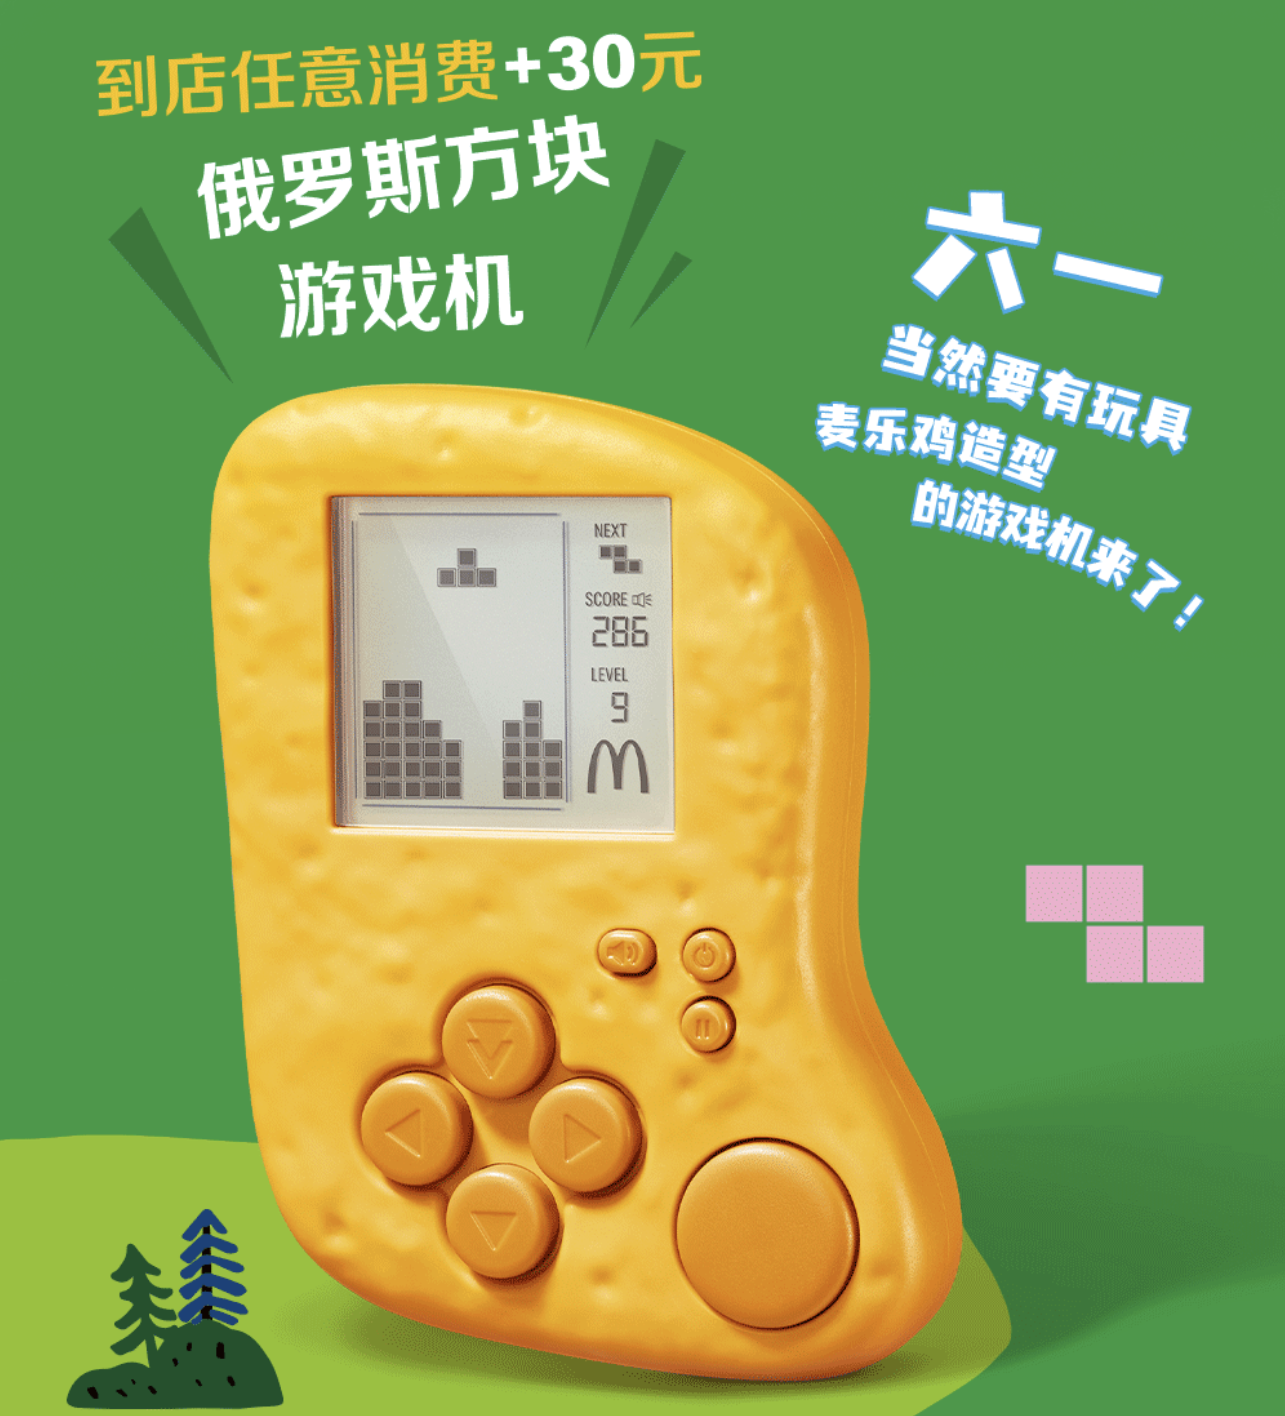 McDonald's China Tetris chicken nugget toy